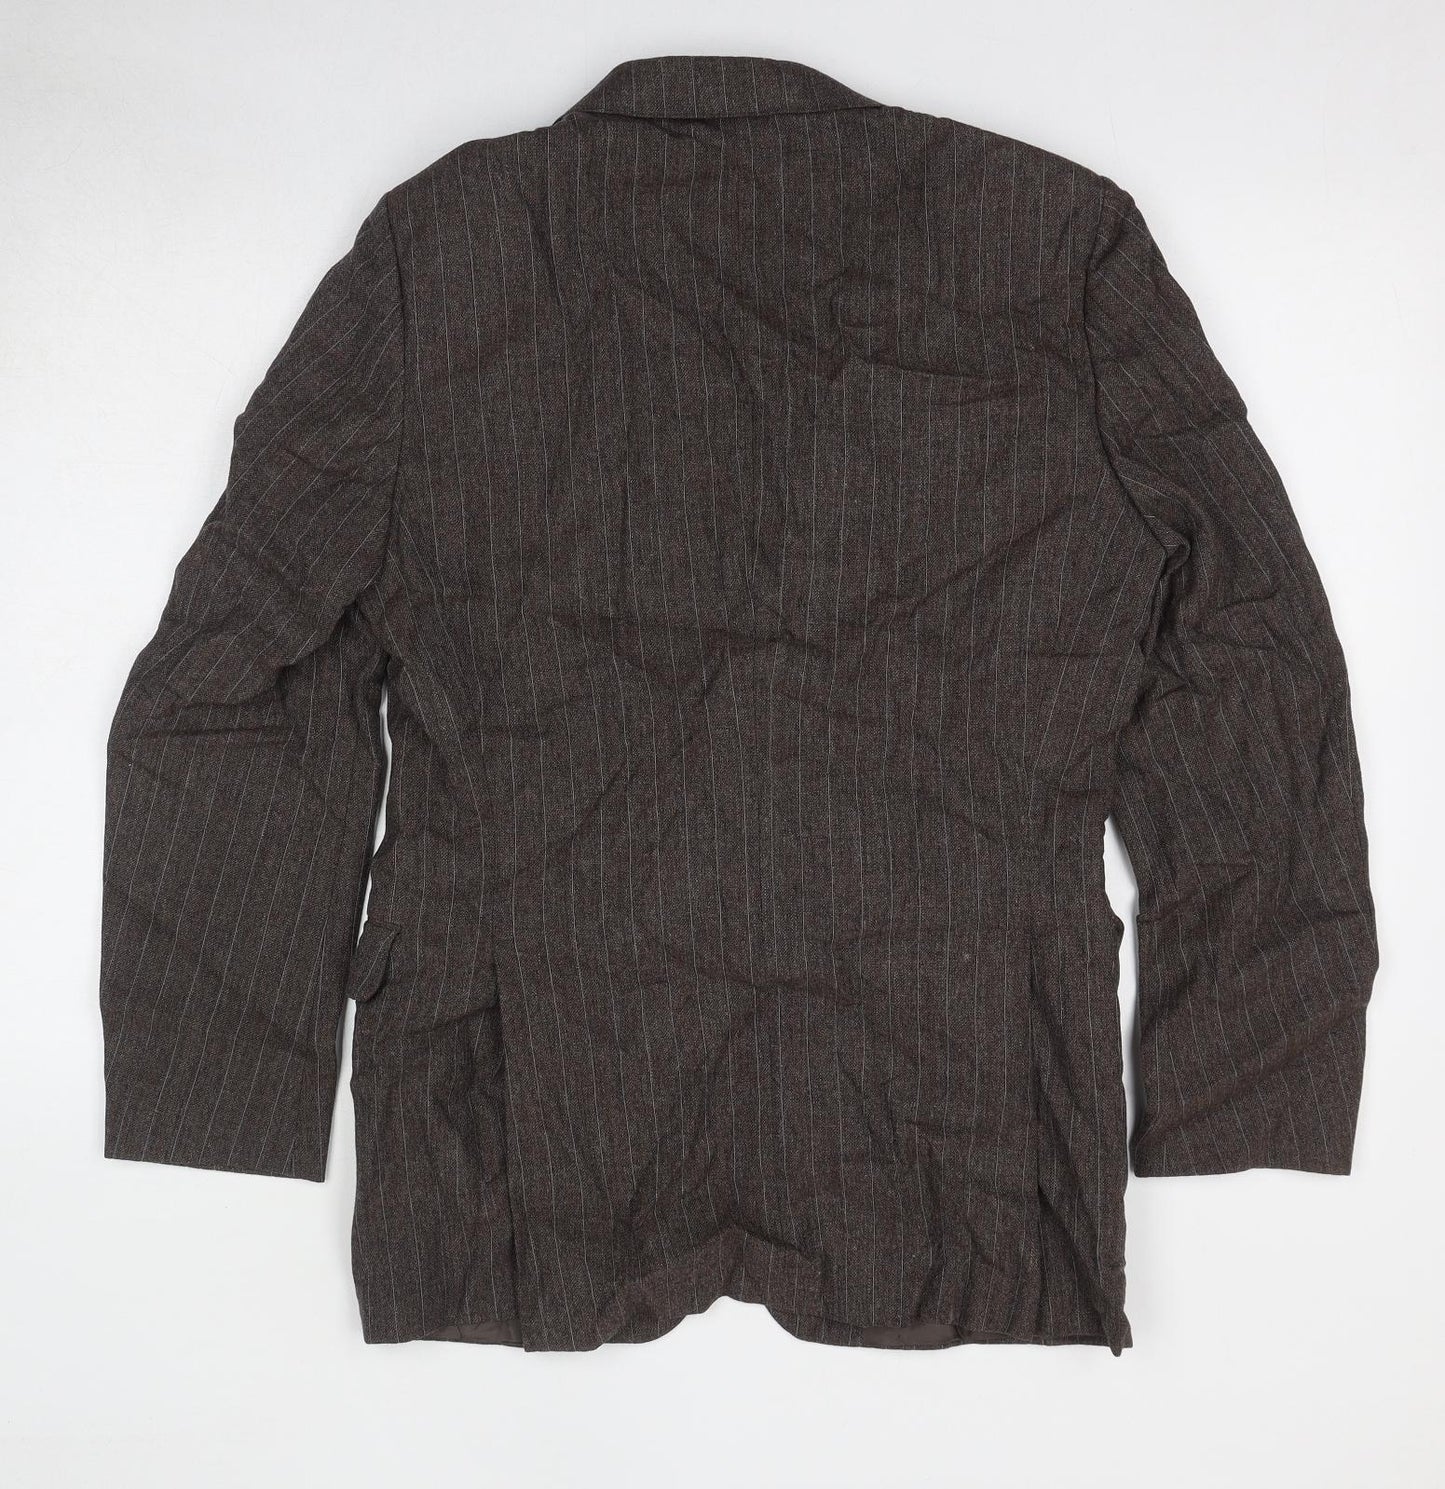 Jaeger Mens Brown Striped Wool Jacket Suit Jacket Size 40 Regular